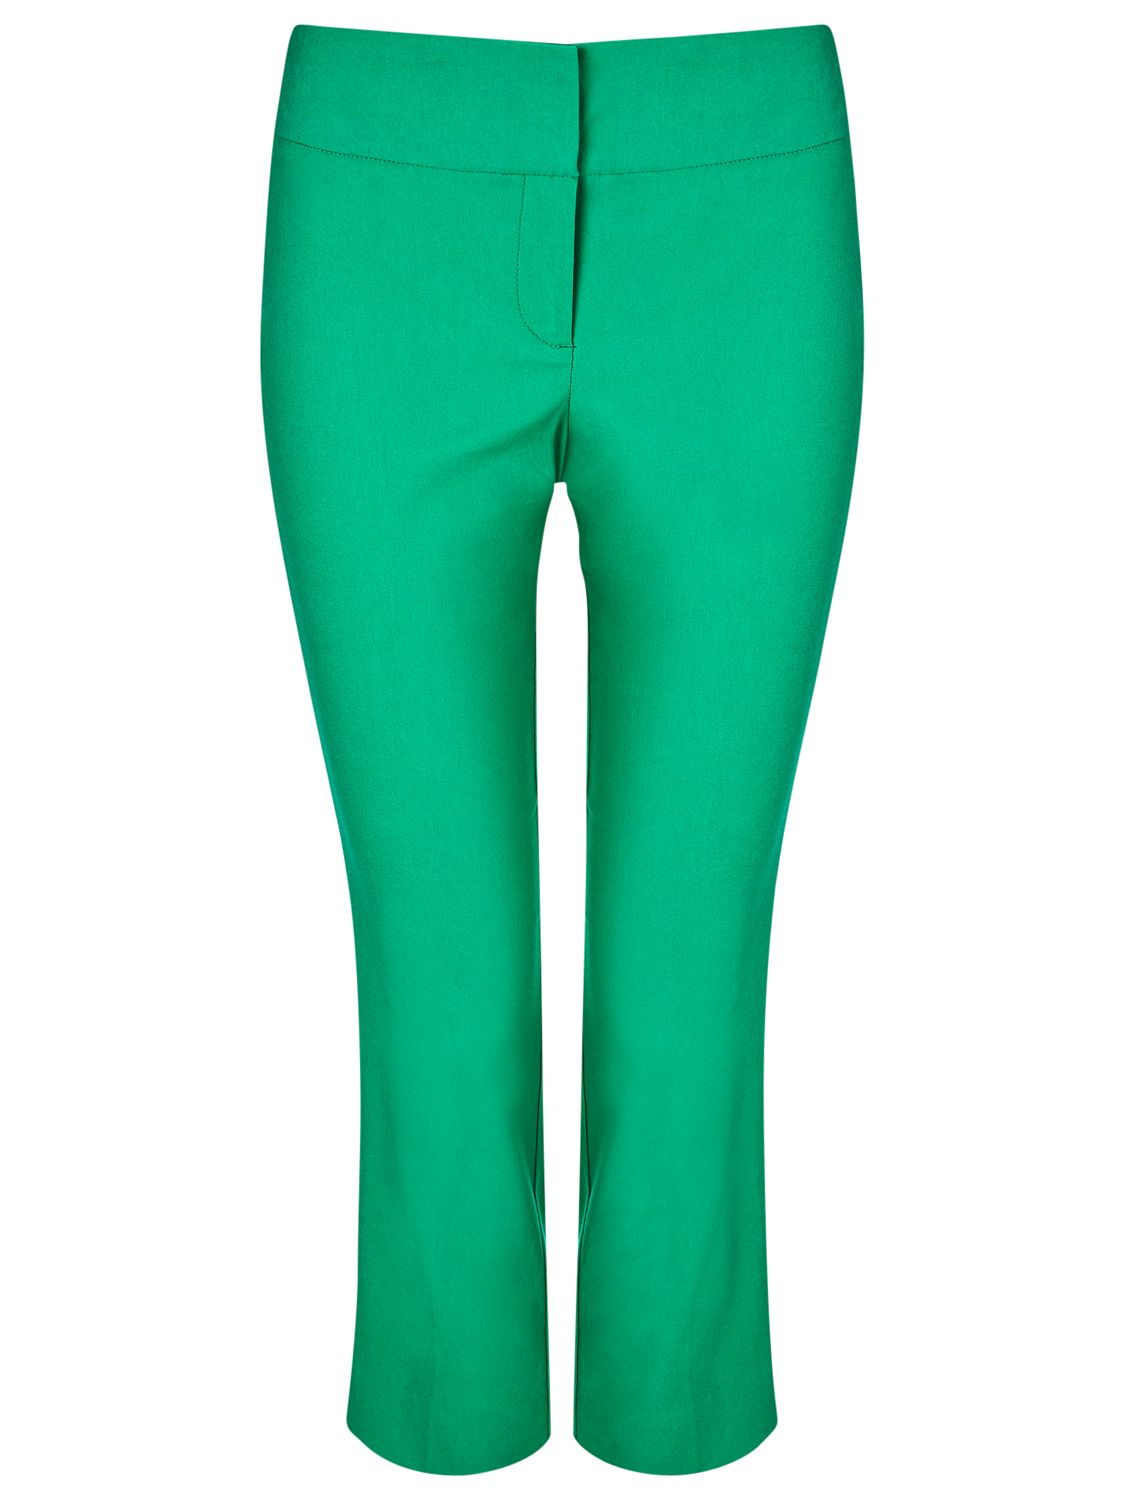 Green | Women's Trousers & Leggings | John Lewis